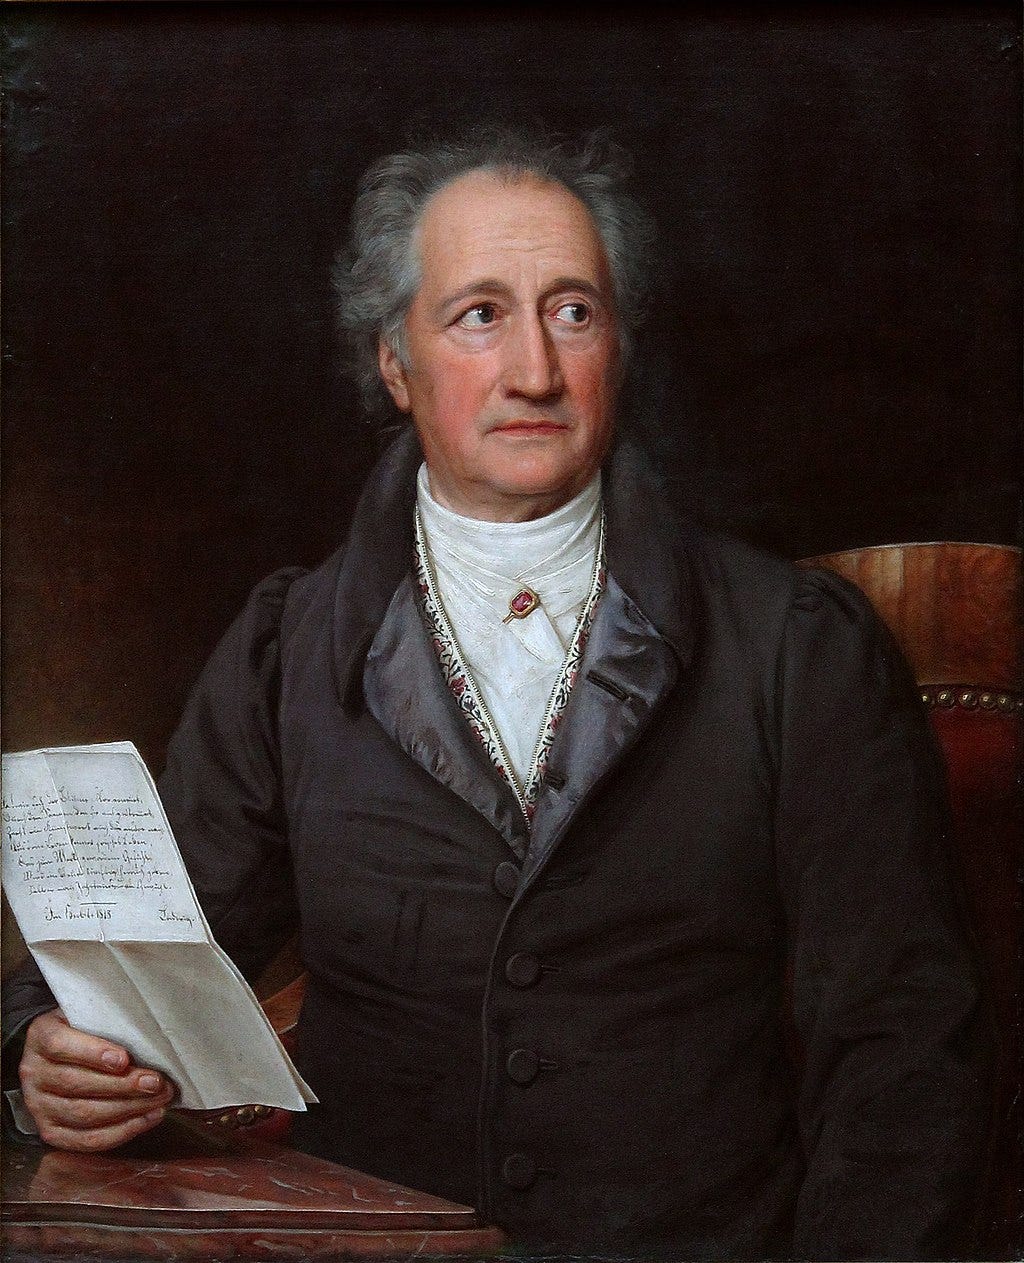  Johann Wolfgang von Goethe, Oil painting by Joseph Karl Stieler, 1828.